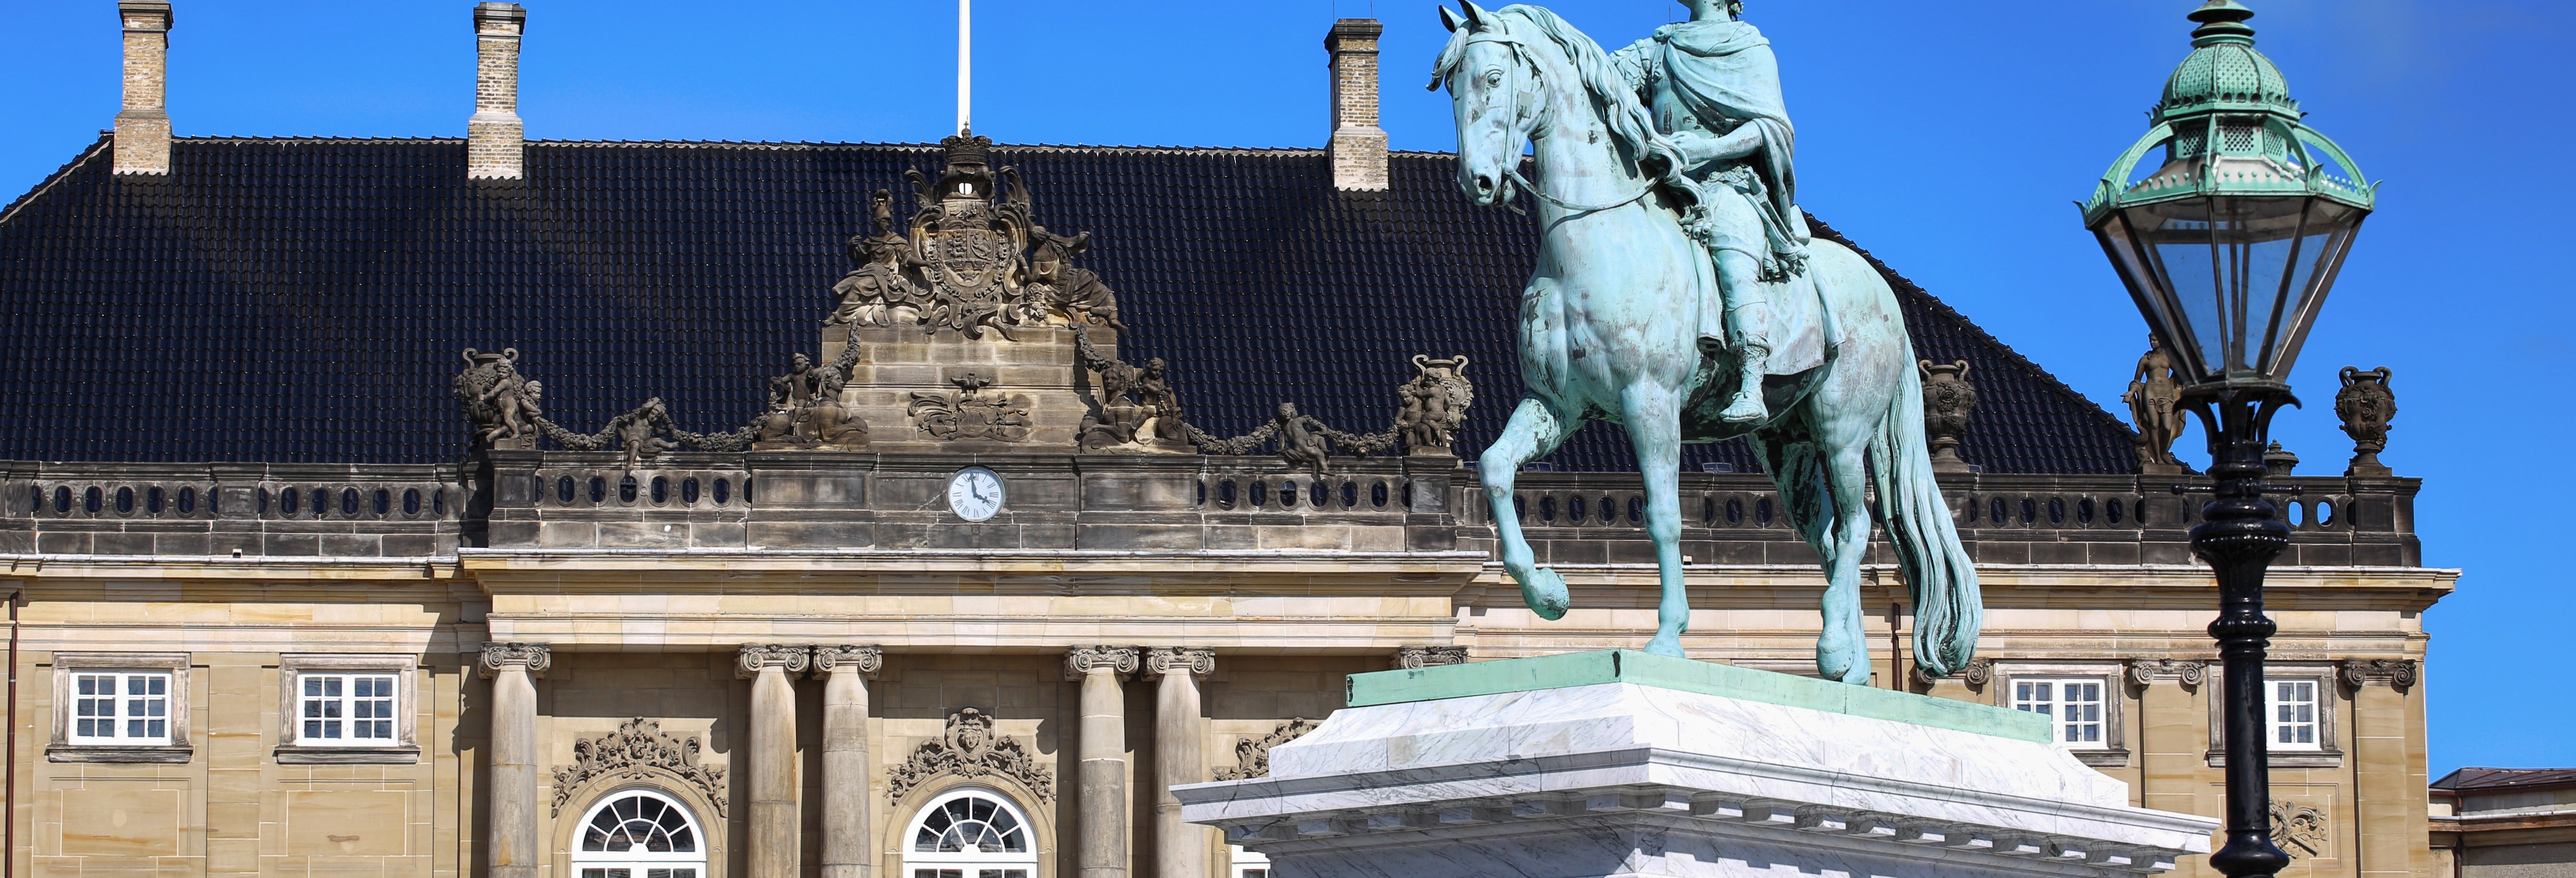 Visita guiada pelo Palácio de Amalienborg